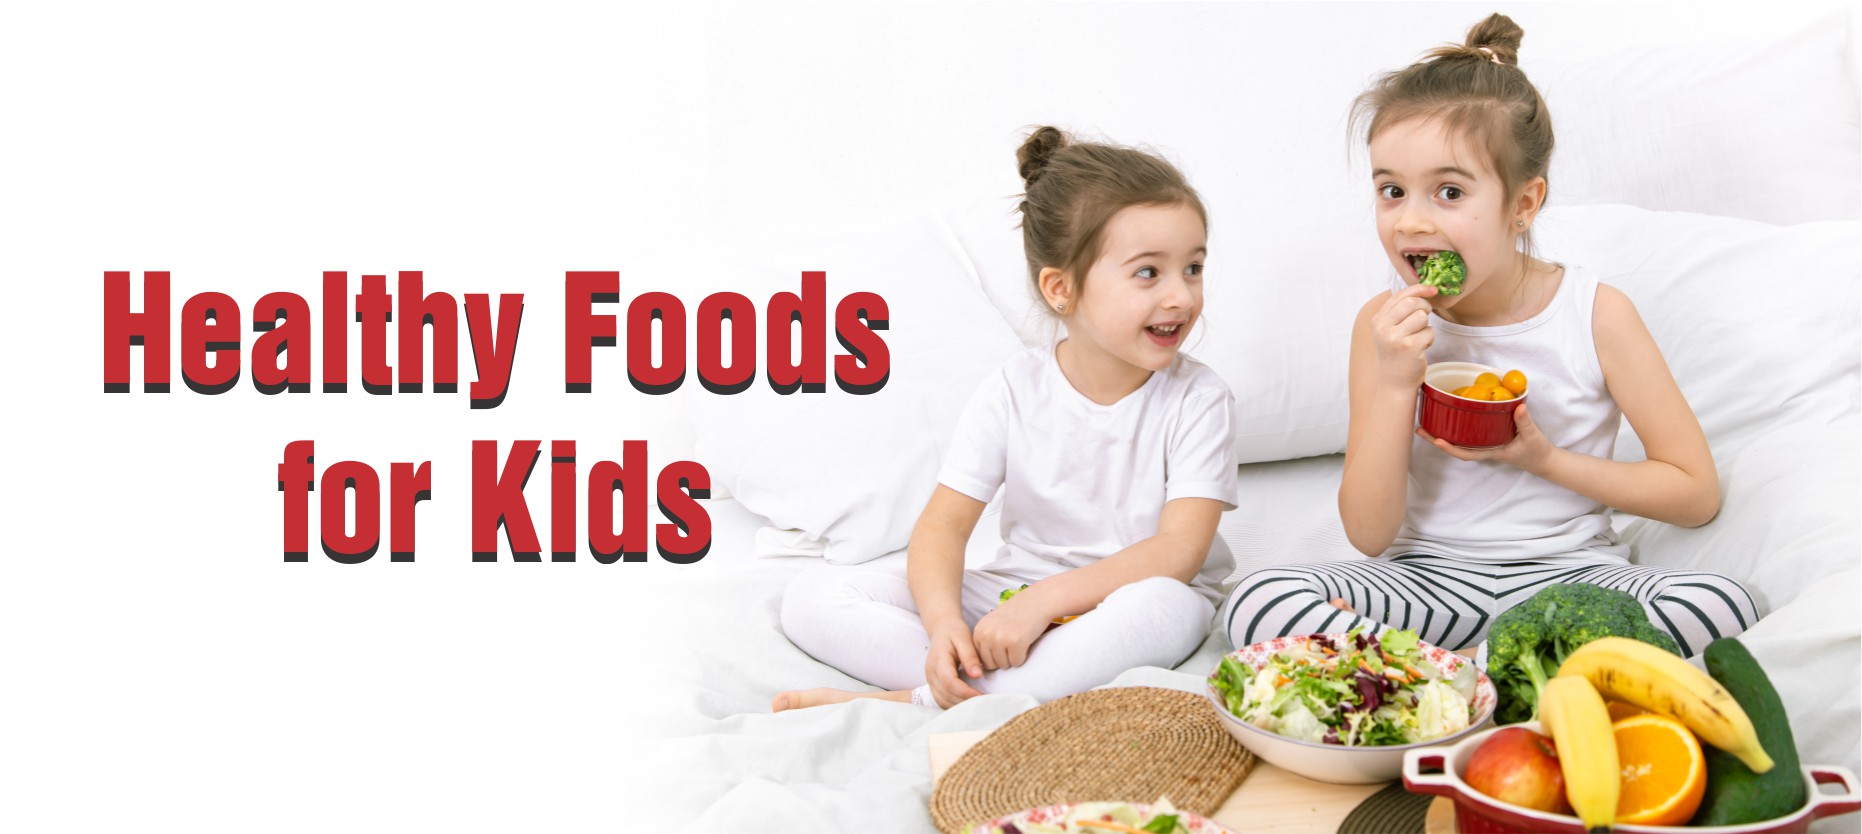 Healthy-foods-for-kids | MedPlusMart